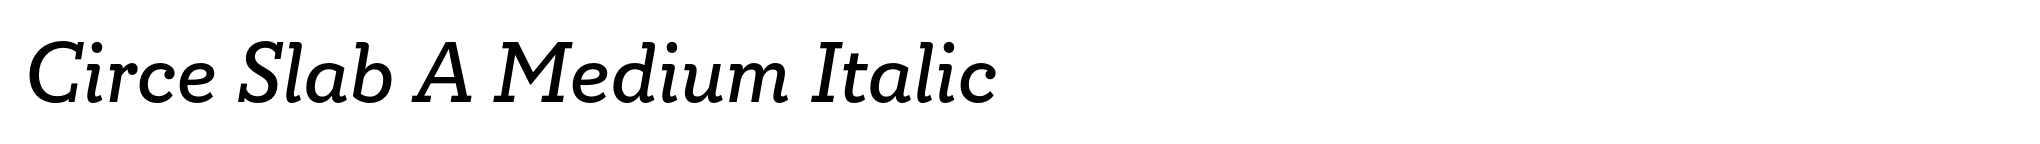 Circe Slab A Medium Italic image